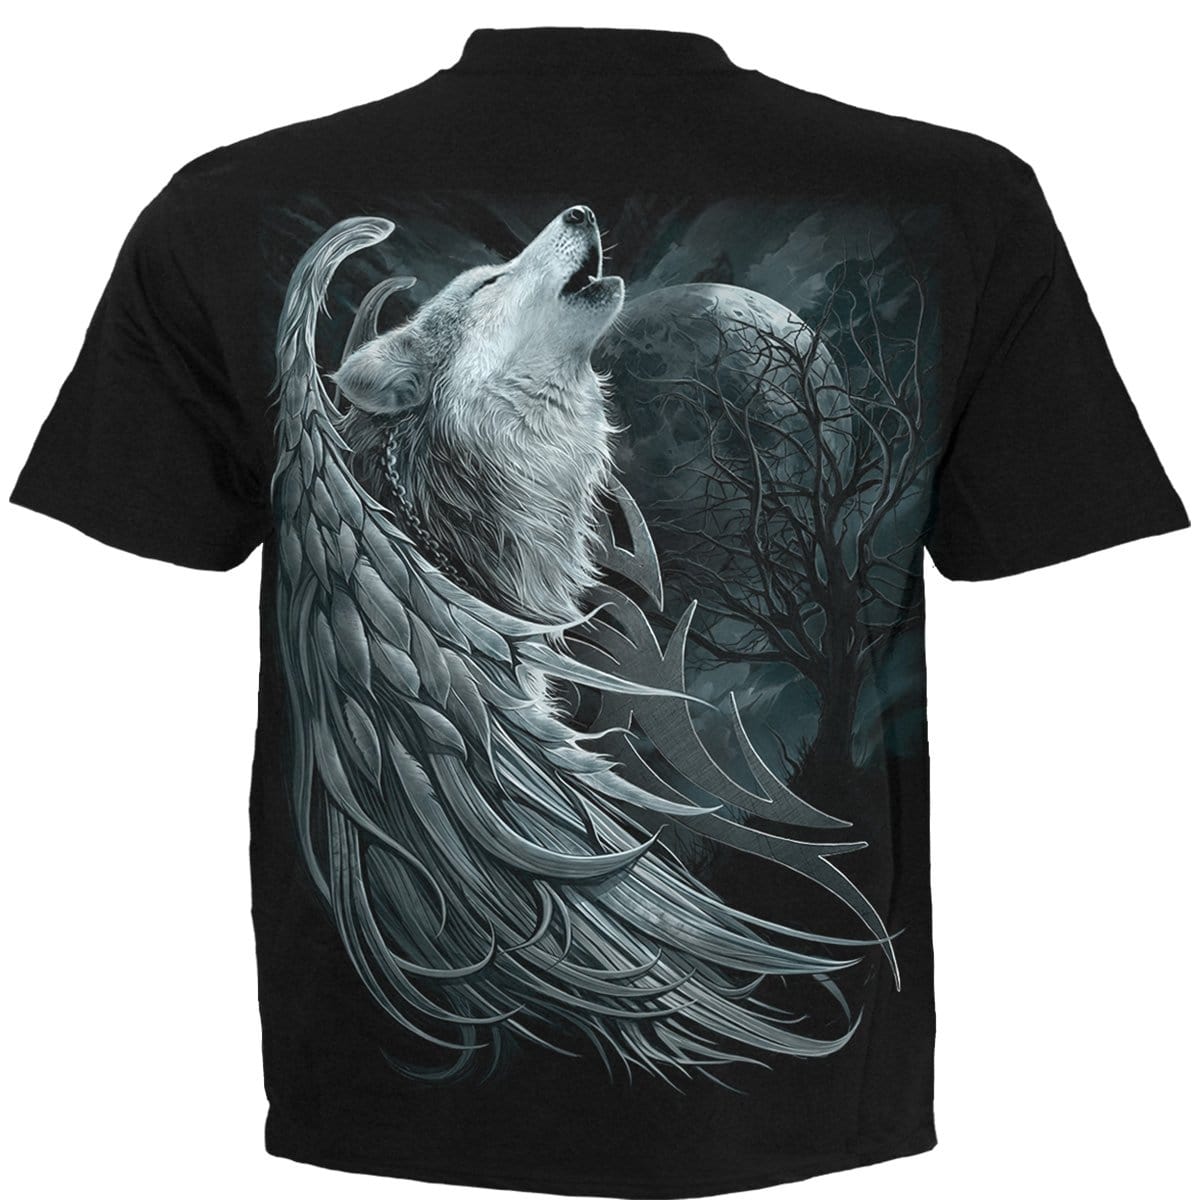 WOLF SPIRIT - T-Shirt Black - Spiral USA